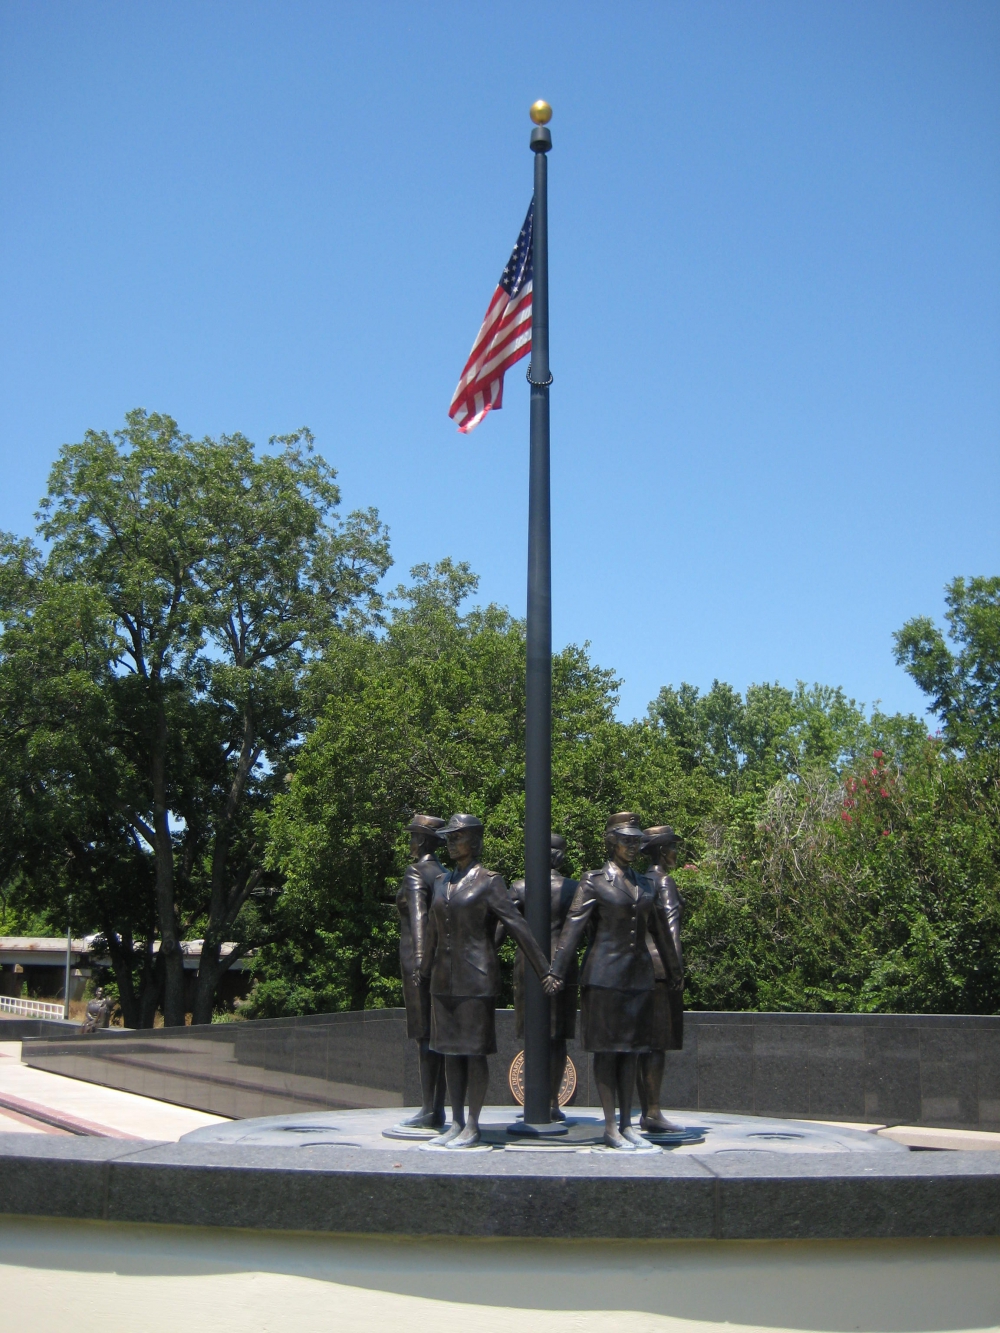 Del City, Oklahoma Patriot Park Women&#039;s Veterans Monument 